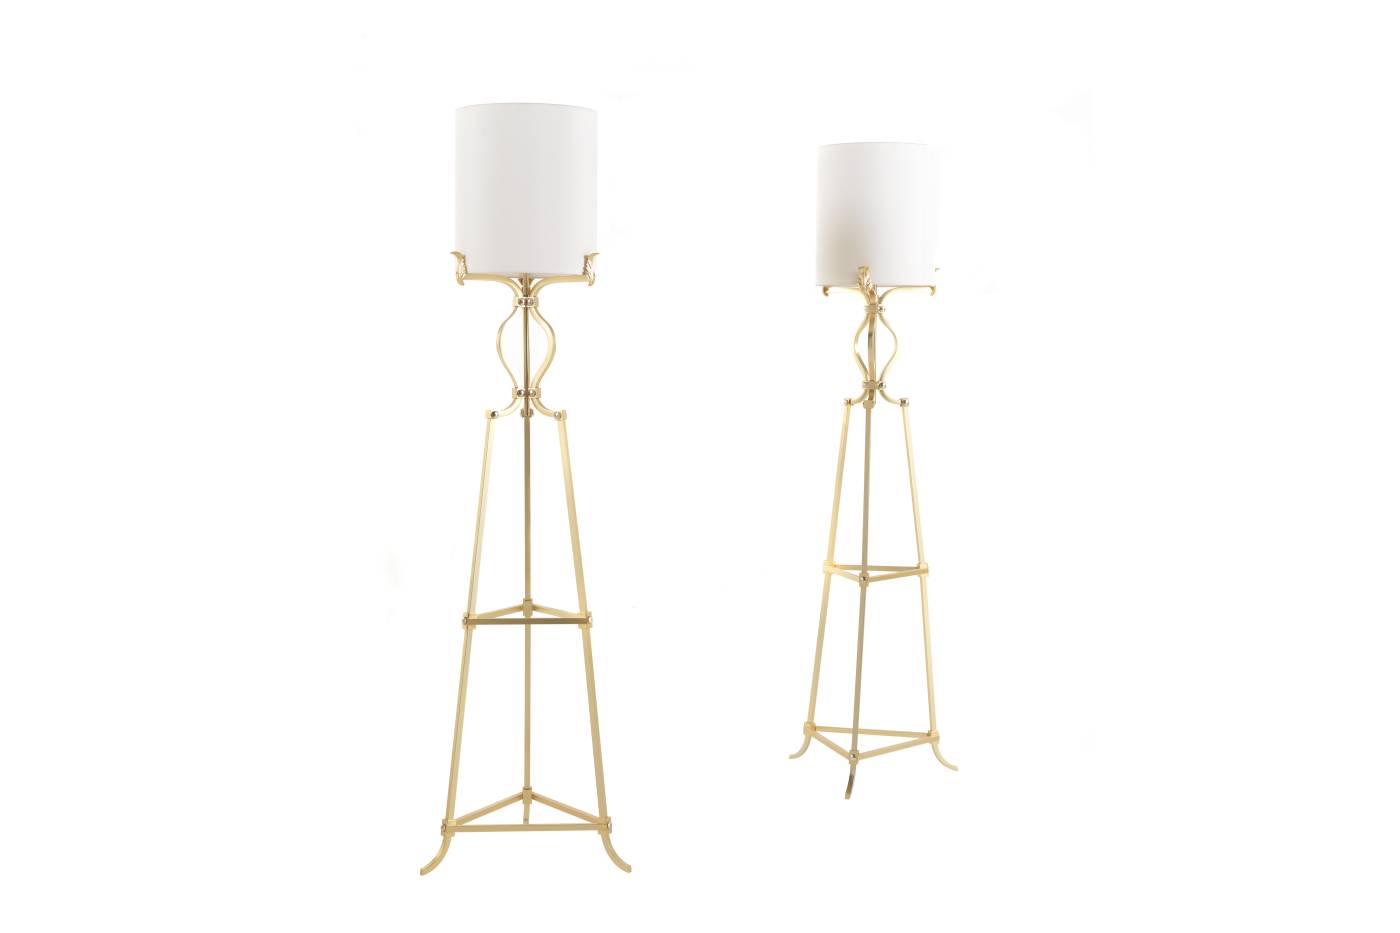 SELENIA floor lamp - Discover timeless elegance with Jumbo Collection's Italian luxury lights. 